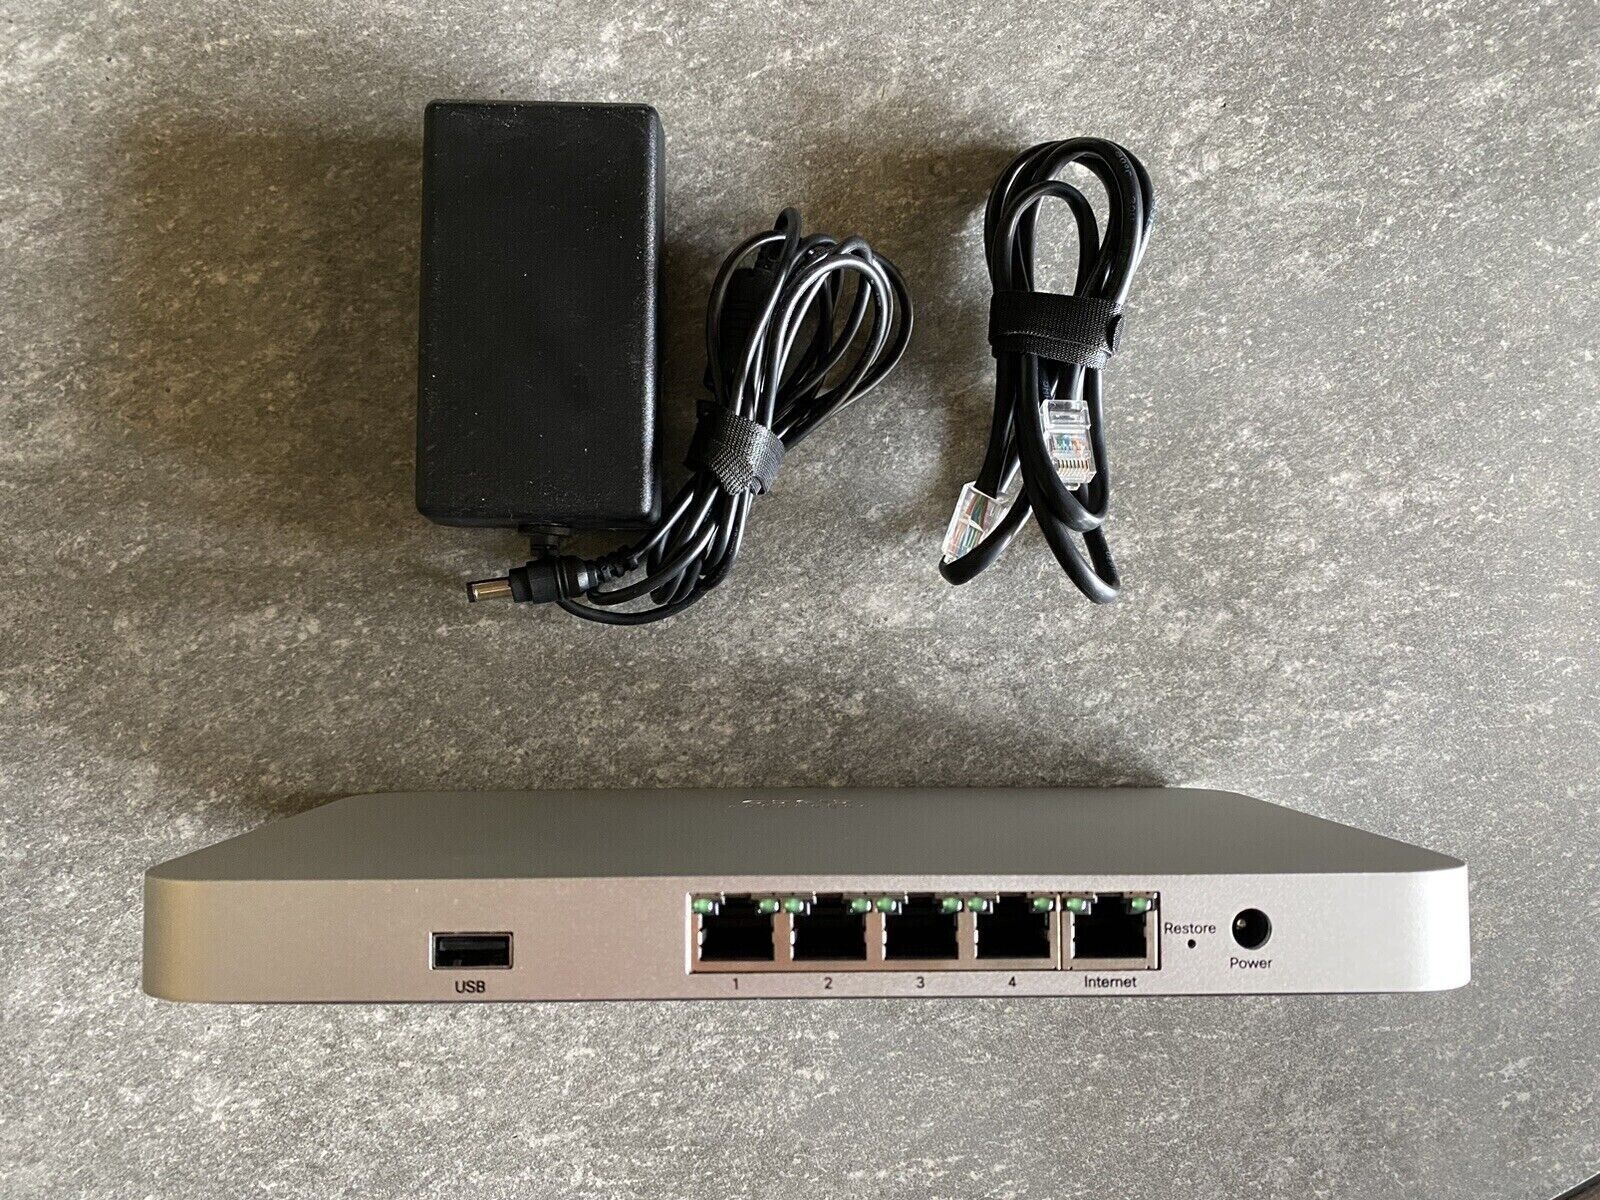 Cisco Meraki MX64-HW Cloud Managed Firewall Unclaimed w/ power supply